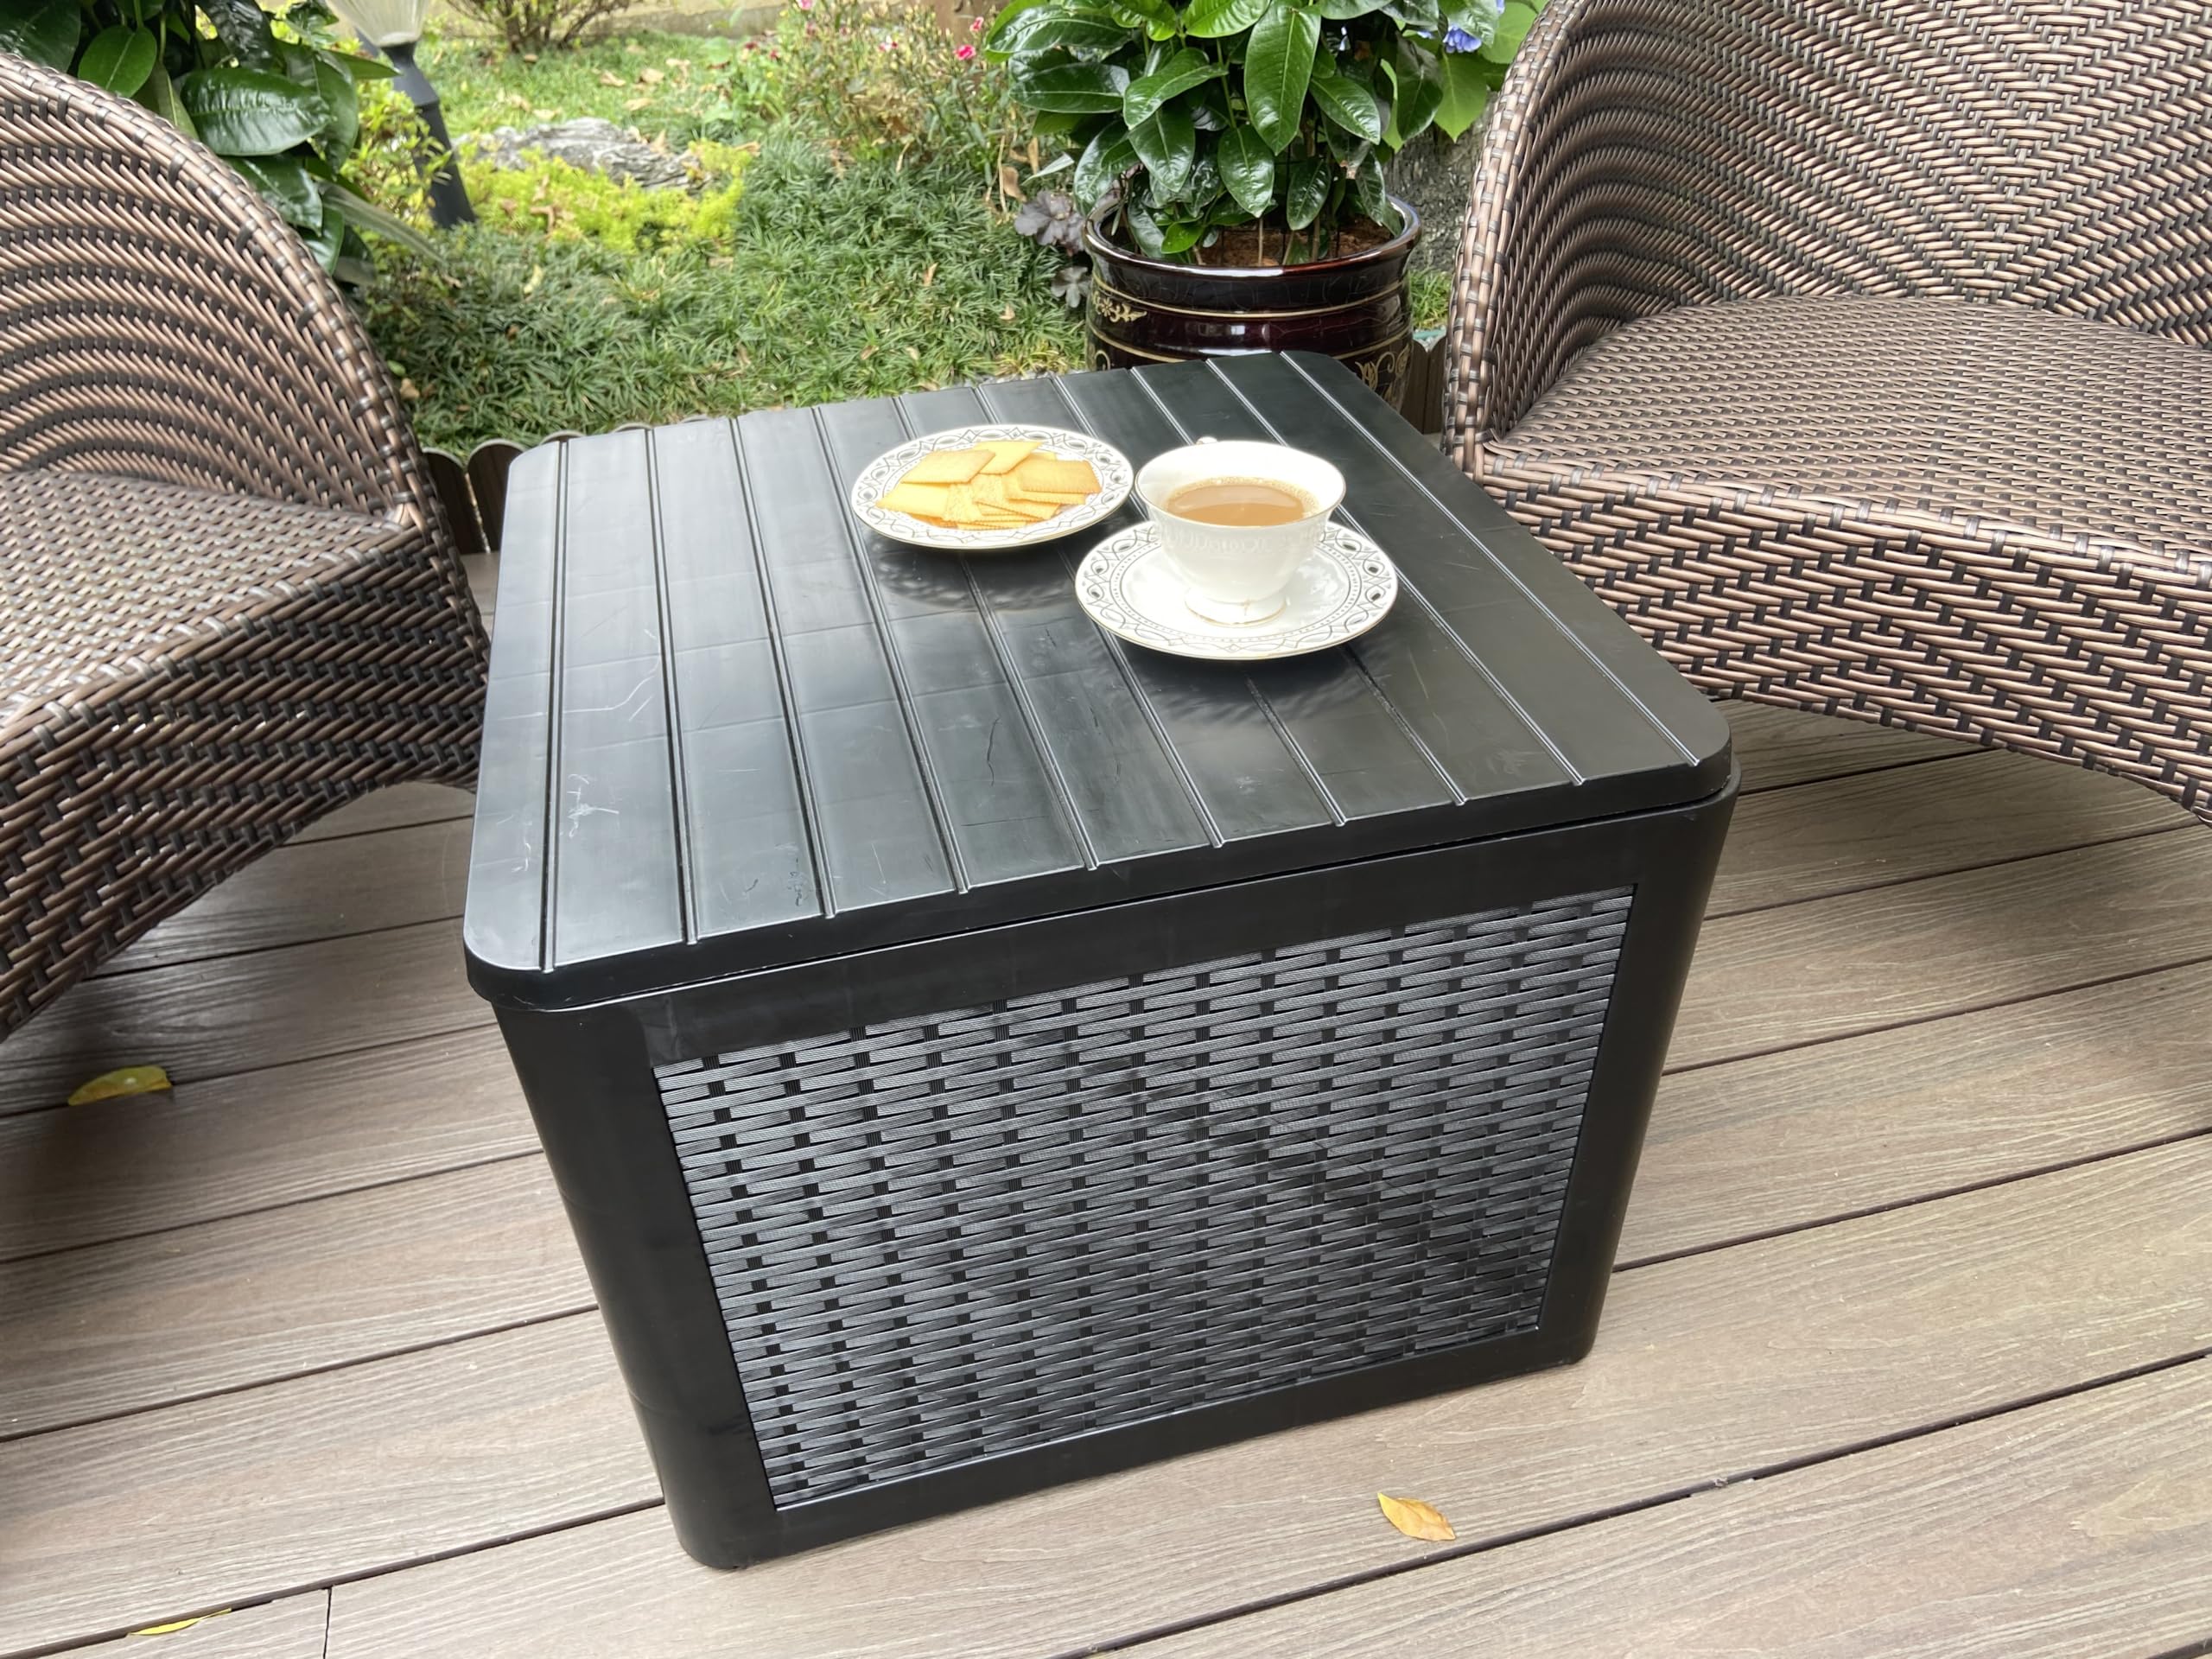 EHHLY Deck Box, Deck Box, Patio Coffee Table with Storage, 36 Gallon, Black